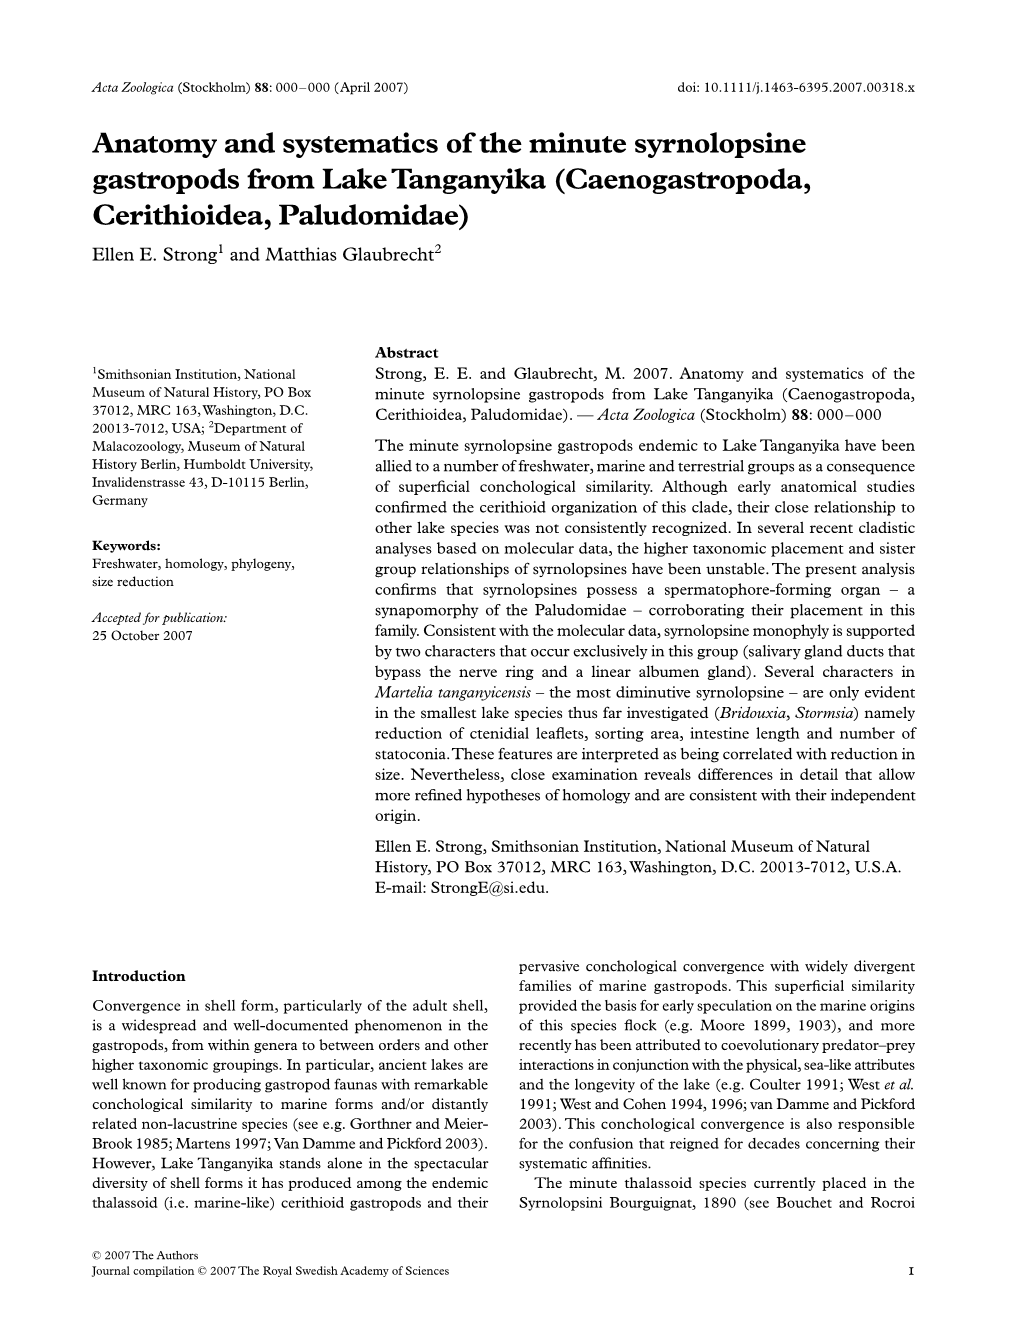 Caenogastropoda, Cerithioidea, Paludomidae) Ellen E